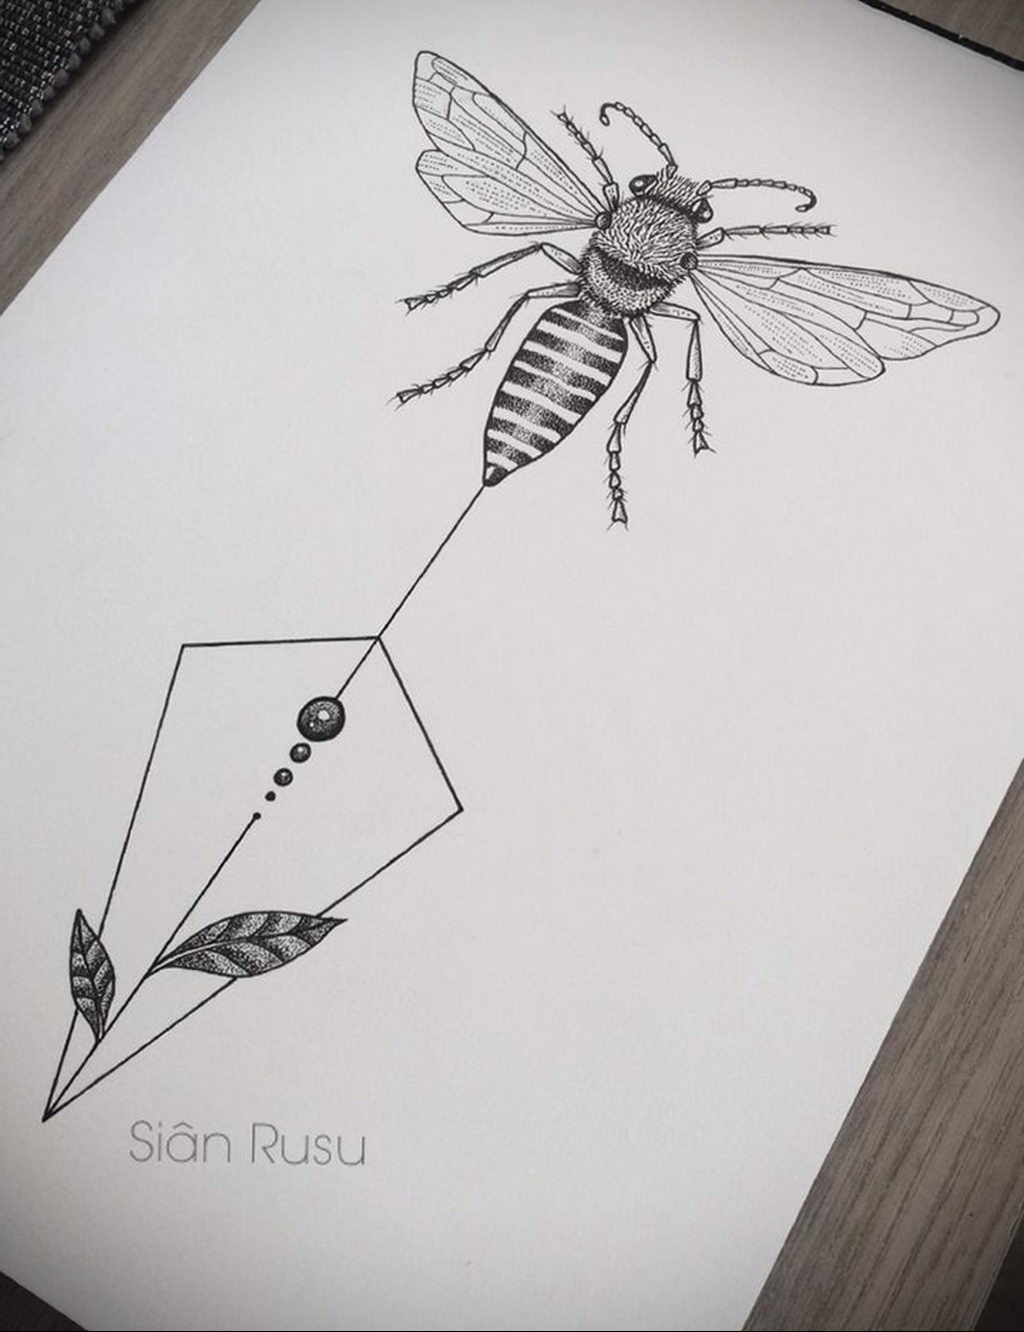 Ð¡Ñ‚Ð°Ñ‚ÑŒÐ¸ Ð¾ Ñ‚Ð°Ñ‚ÑƒÐ¸Ñ€Ð¾Ð²ÐºÐµ. drawing wasp 07.01.2020 â„– 11019 -wasp tattoo sketch- t...